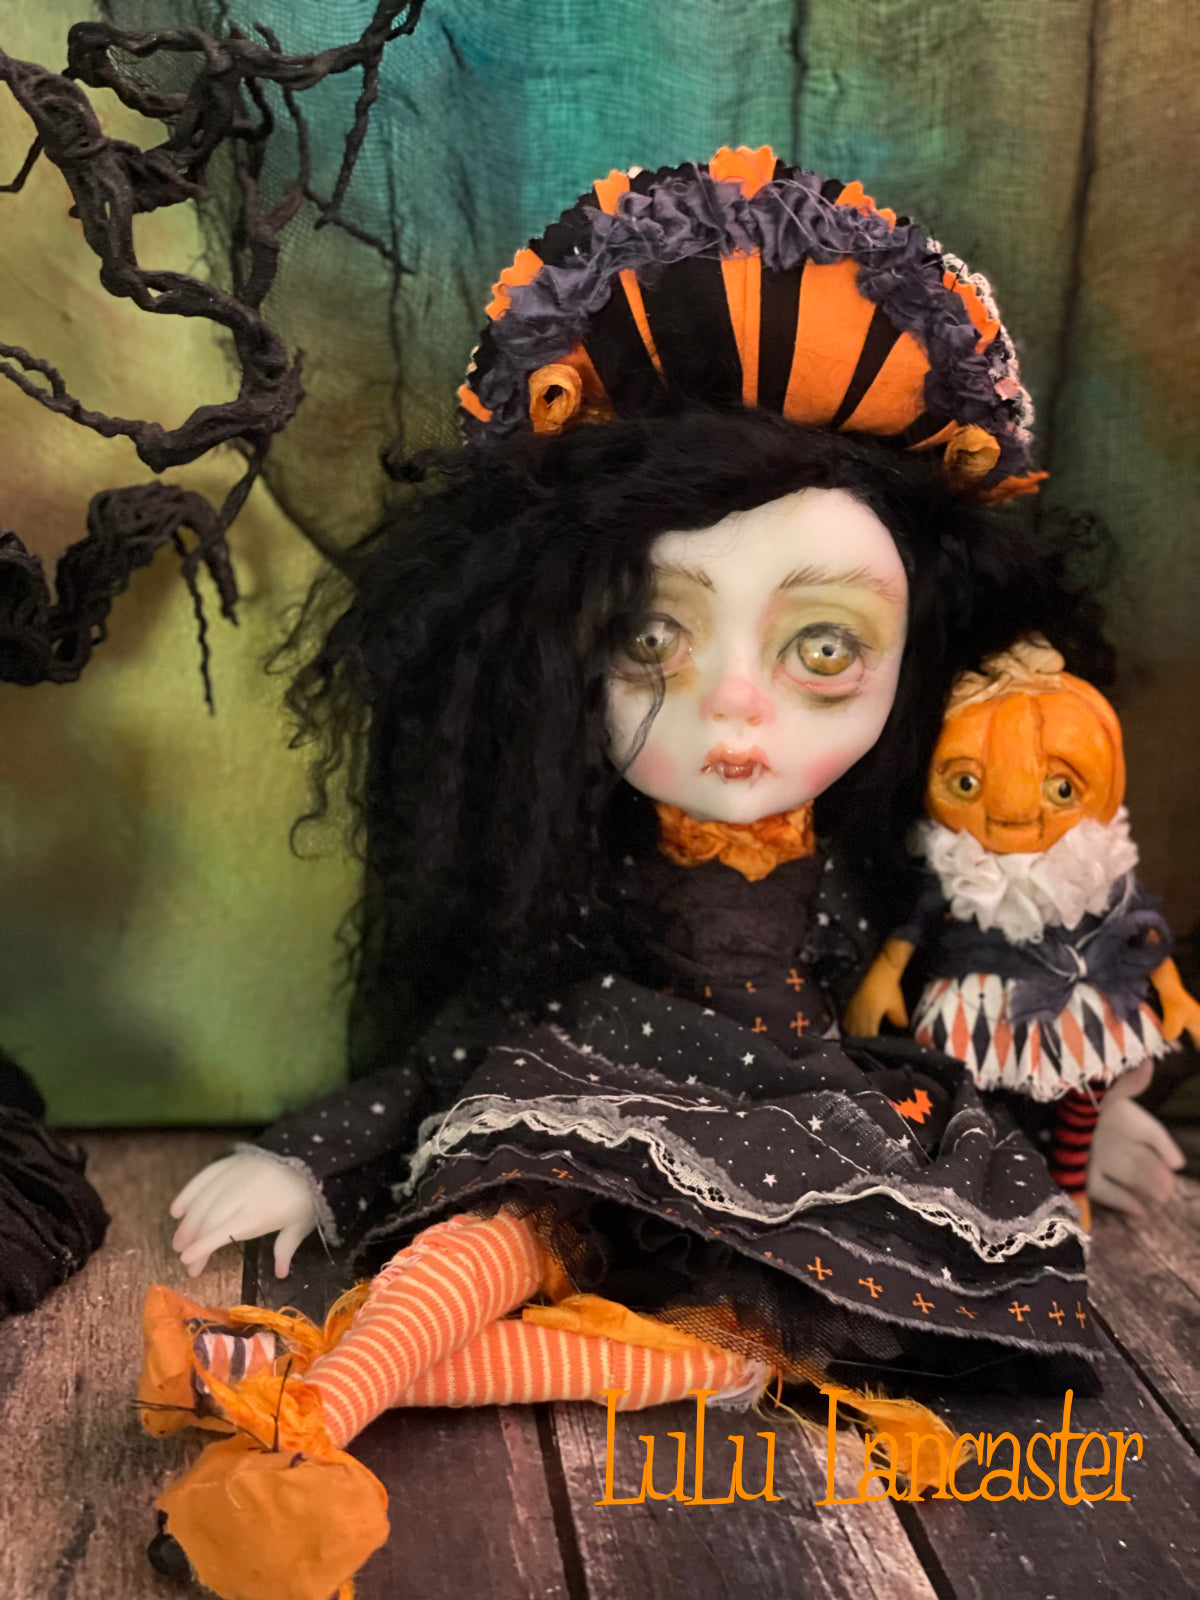 Hazel Vampire Halloween Sitter Original LuLu Lancaster Art Dolls